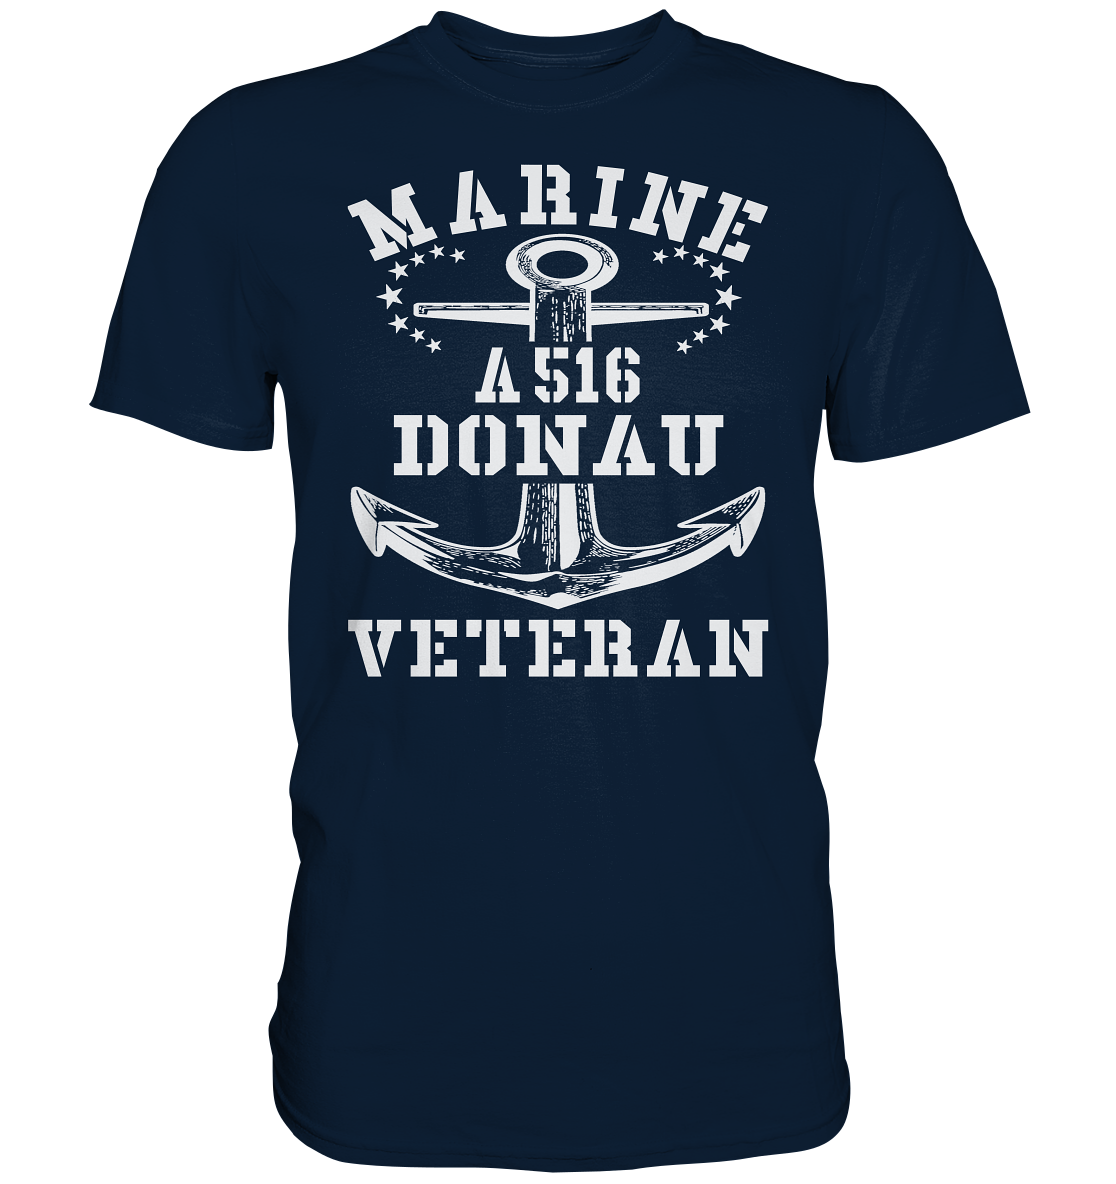 Tender A516 DONAU Marine Veteran  - Premium Shirt